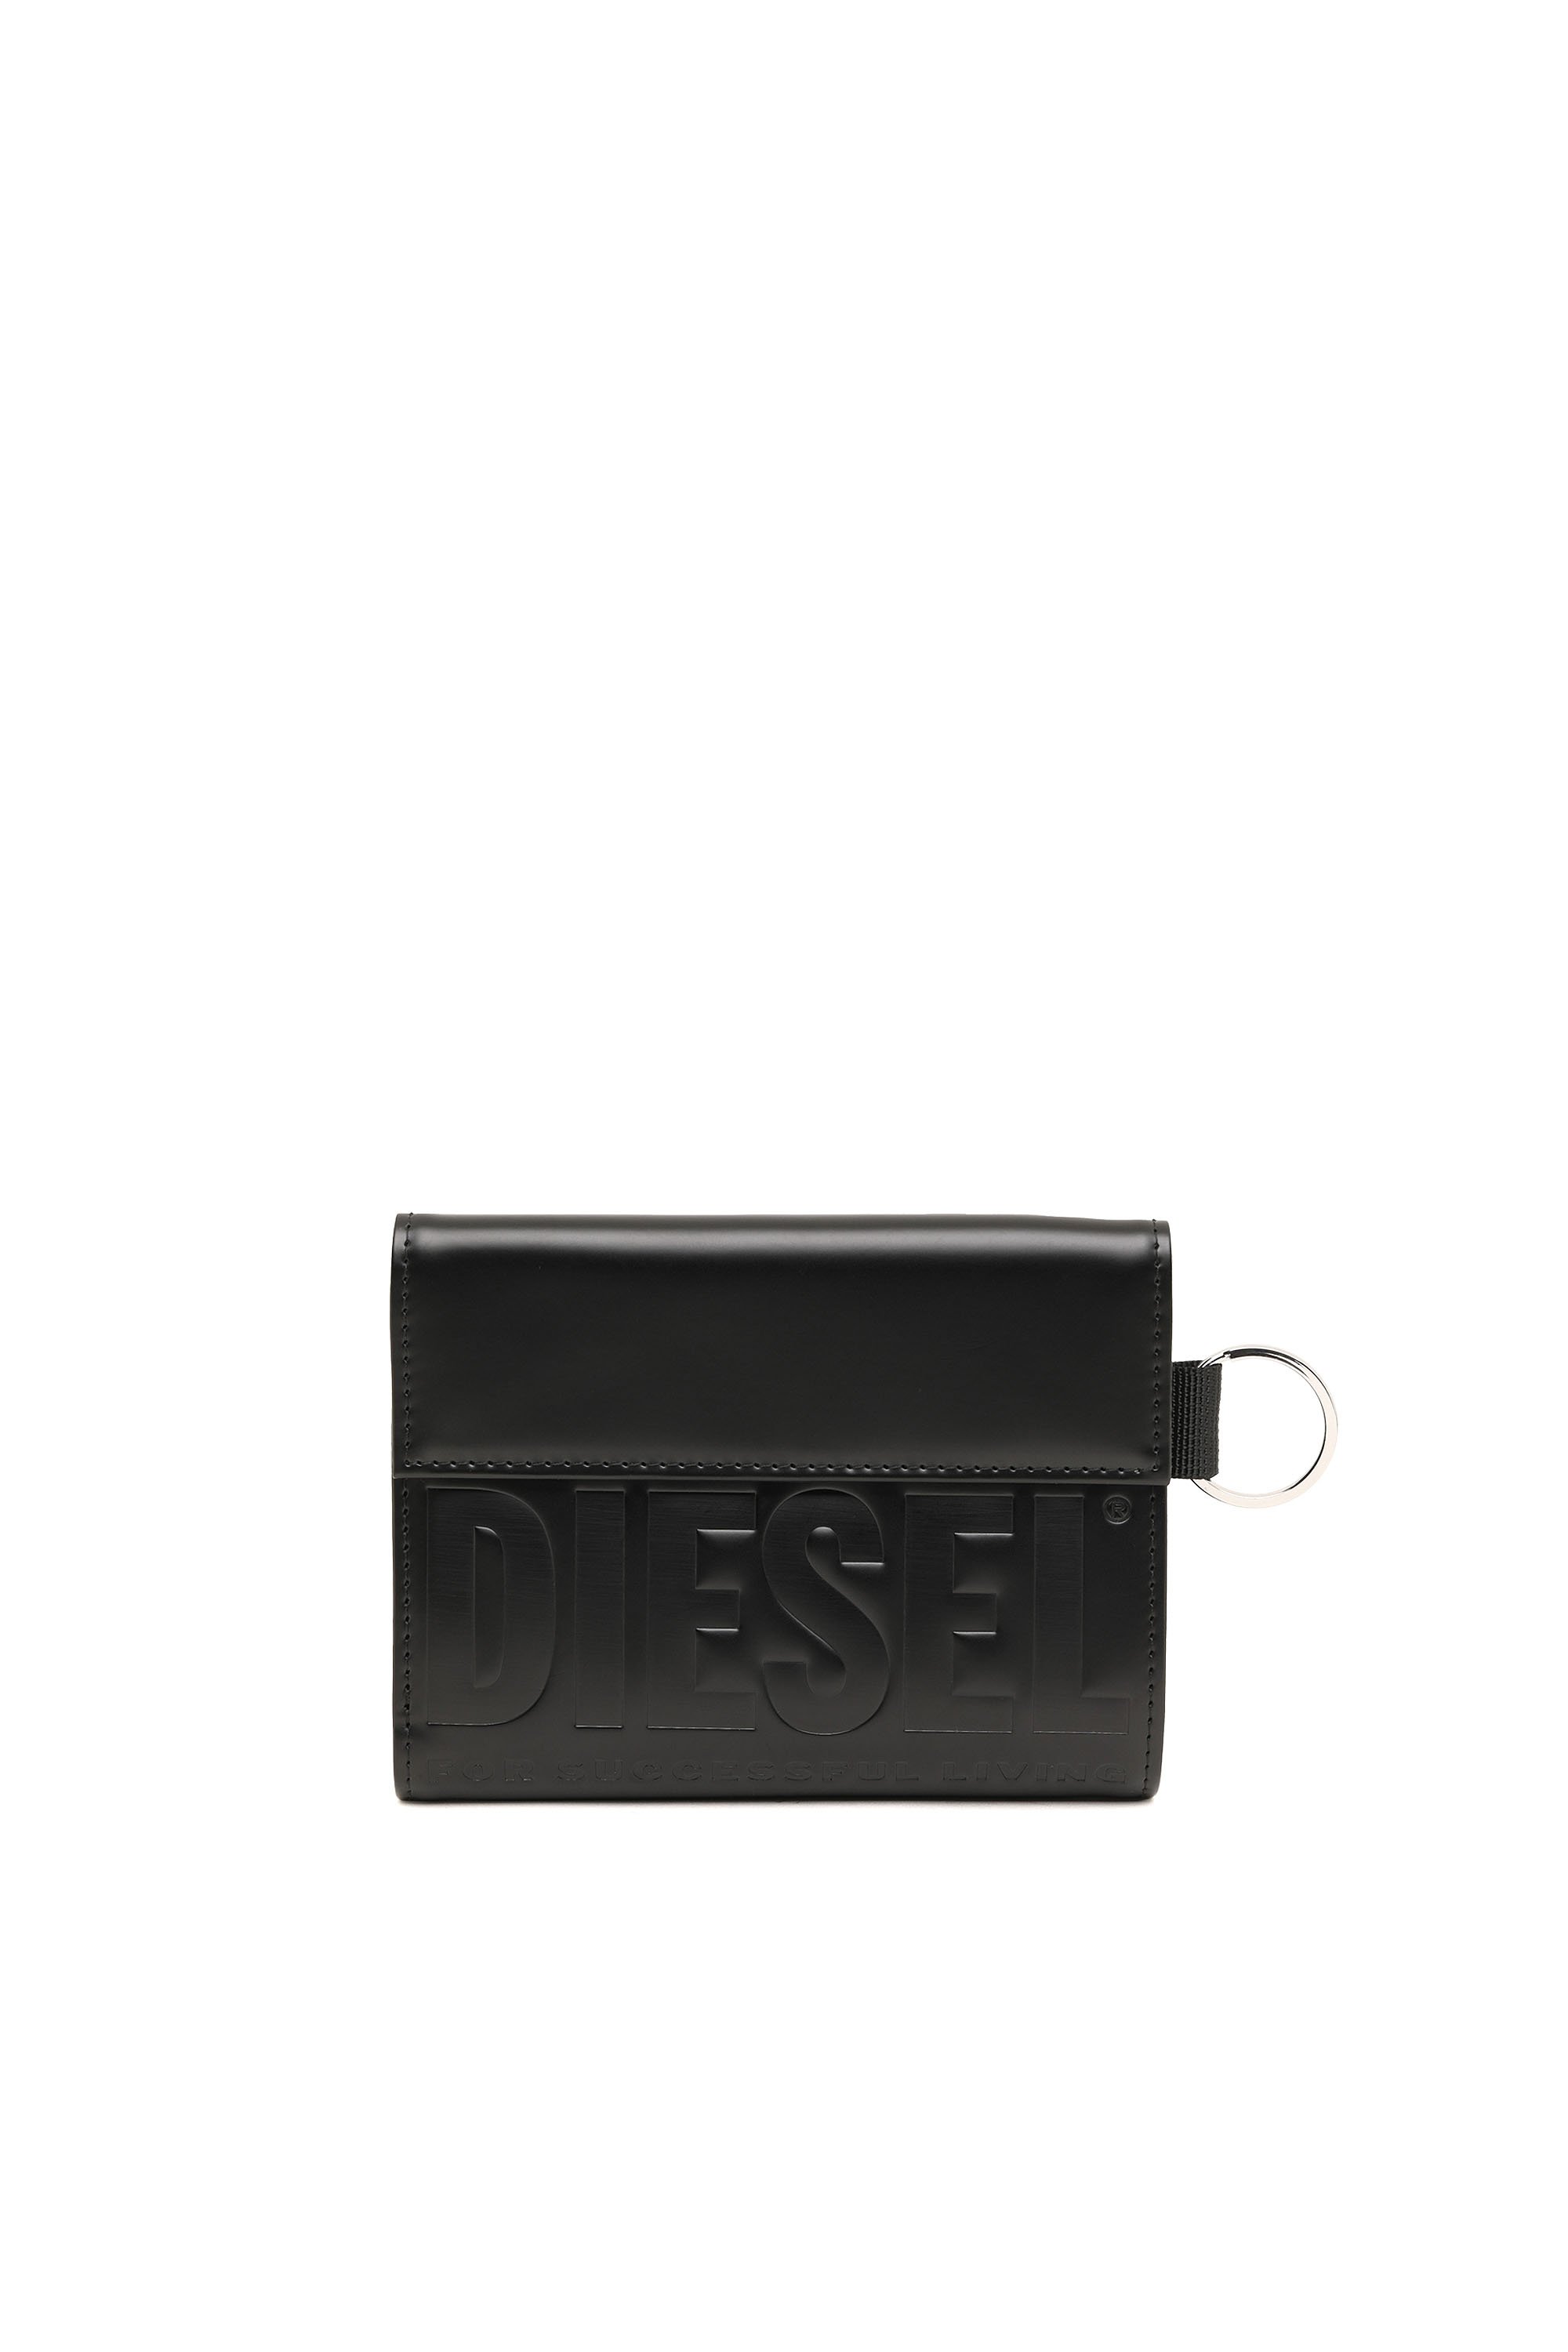 Diesel - YOSHI II, Black - Image 1